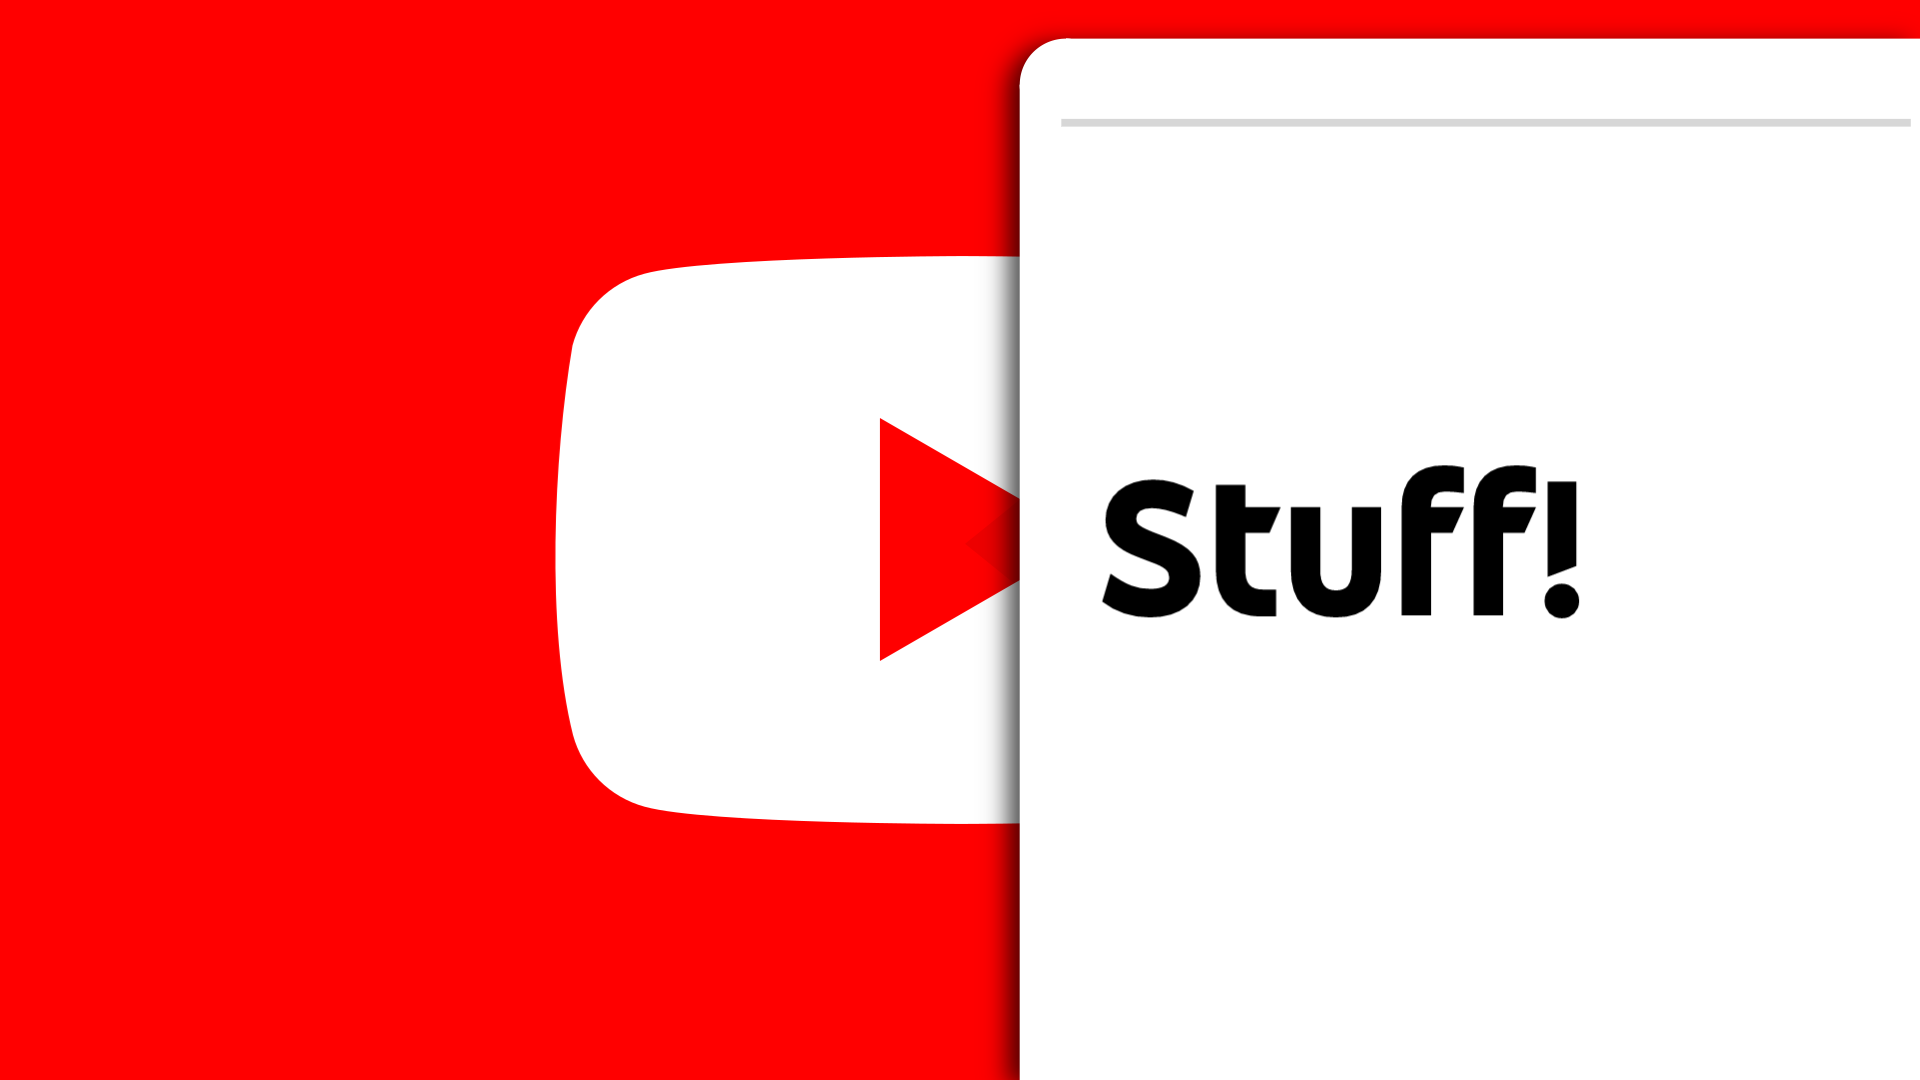 youtube-fullscreen-stuff-hero